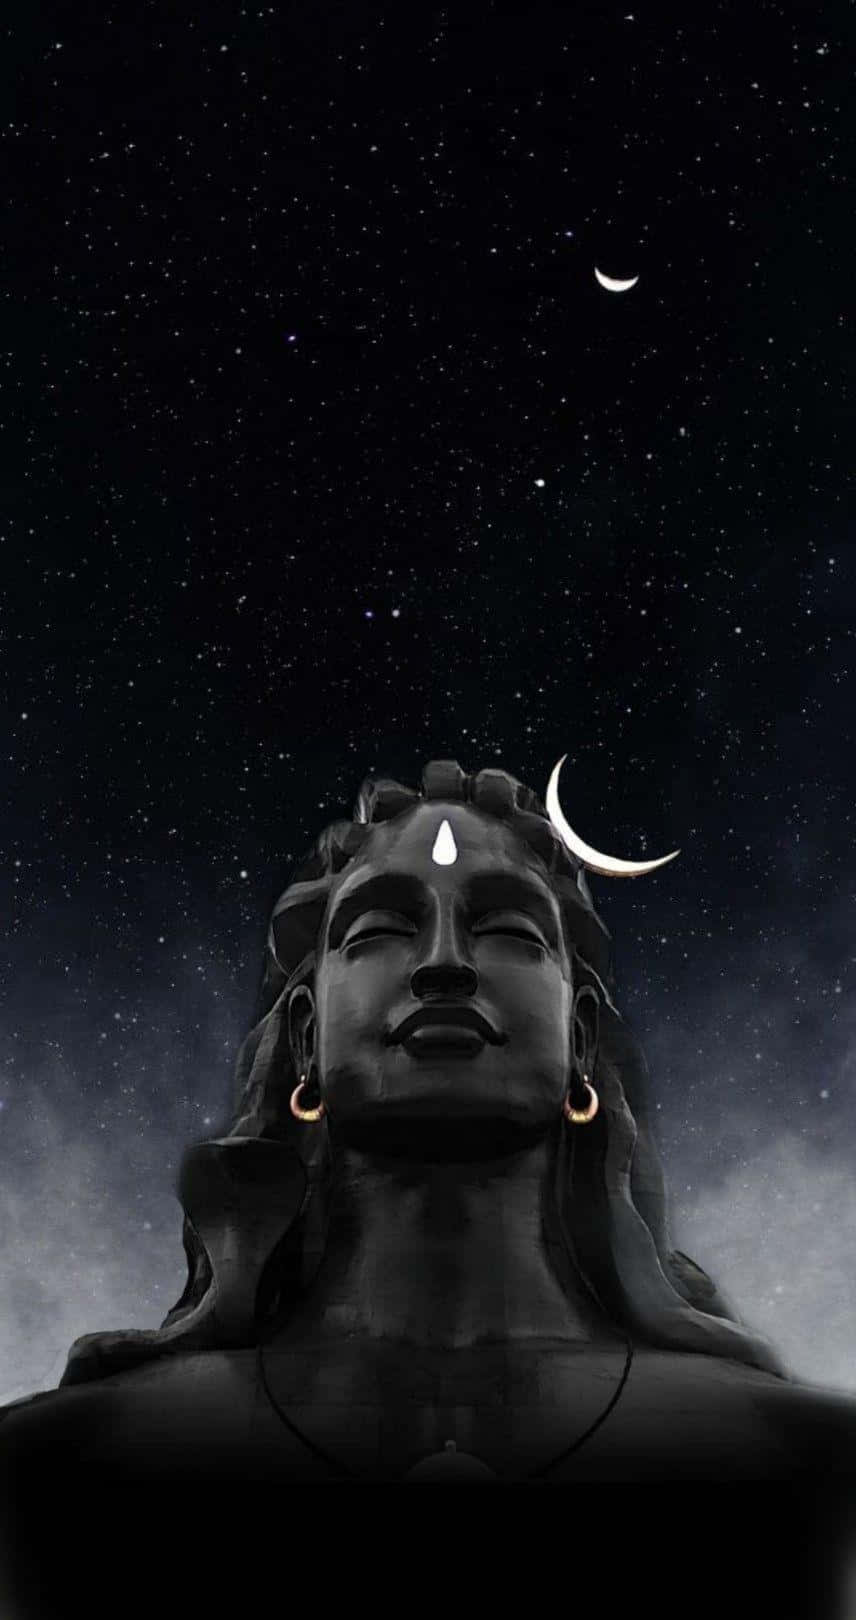 Divine Representation Of Lord Shiva In Meditation. Wallpaper